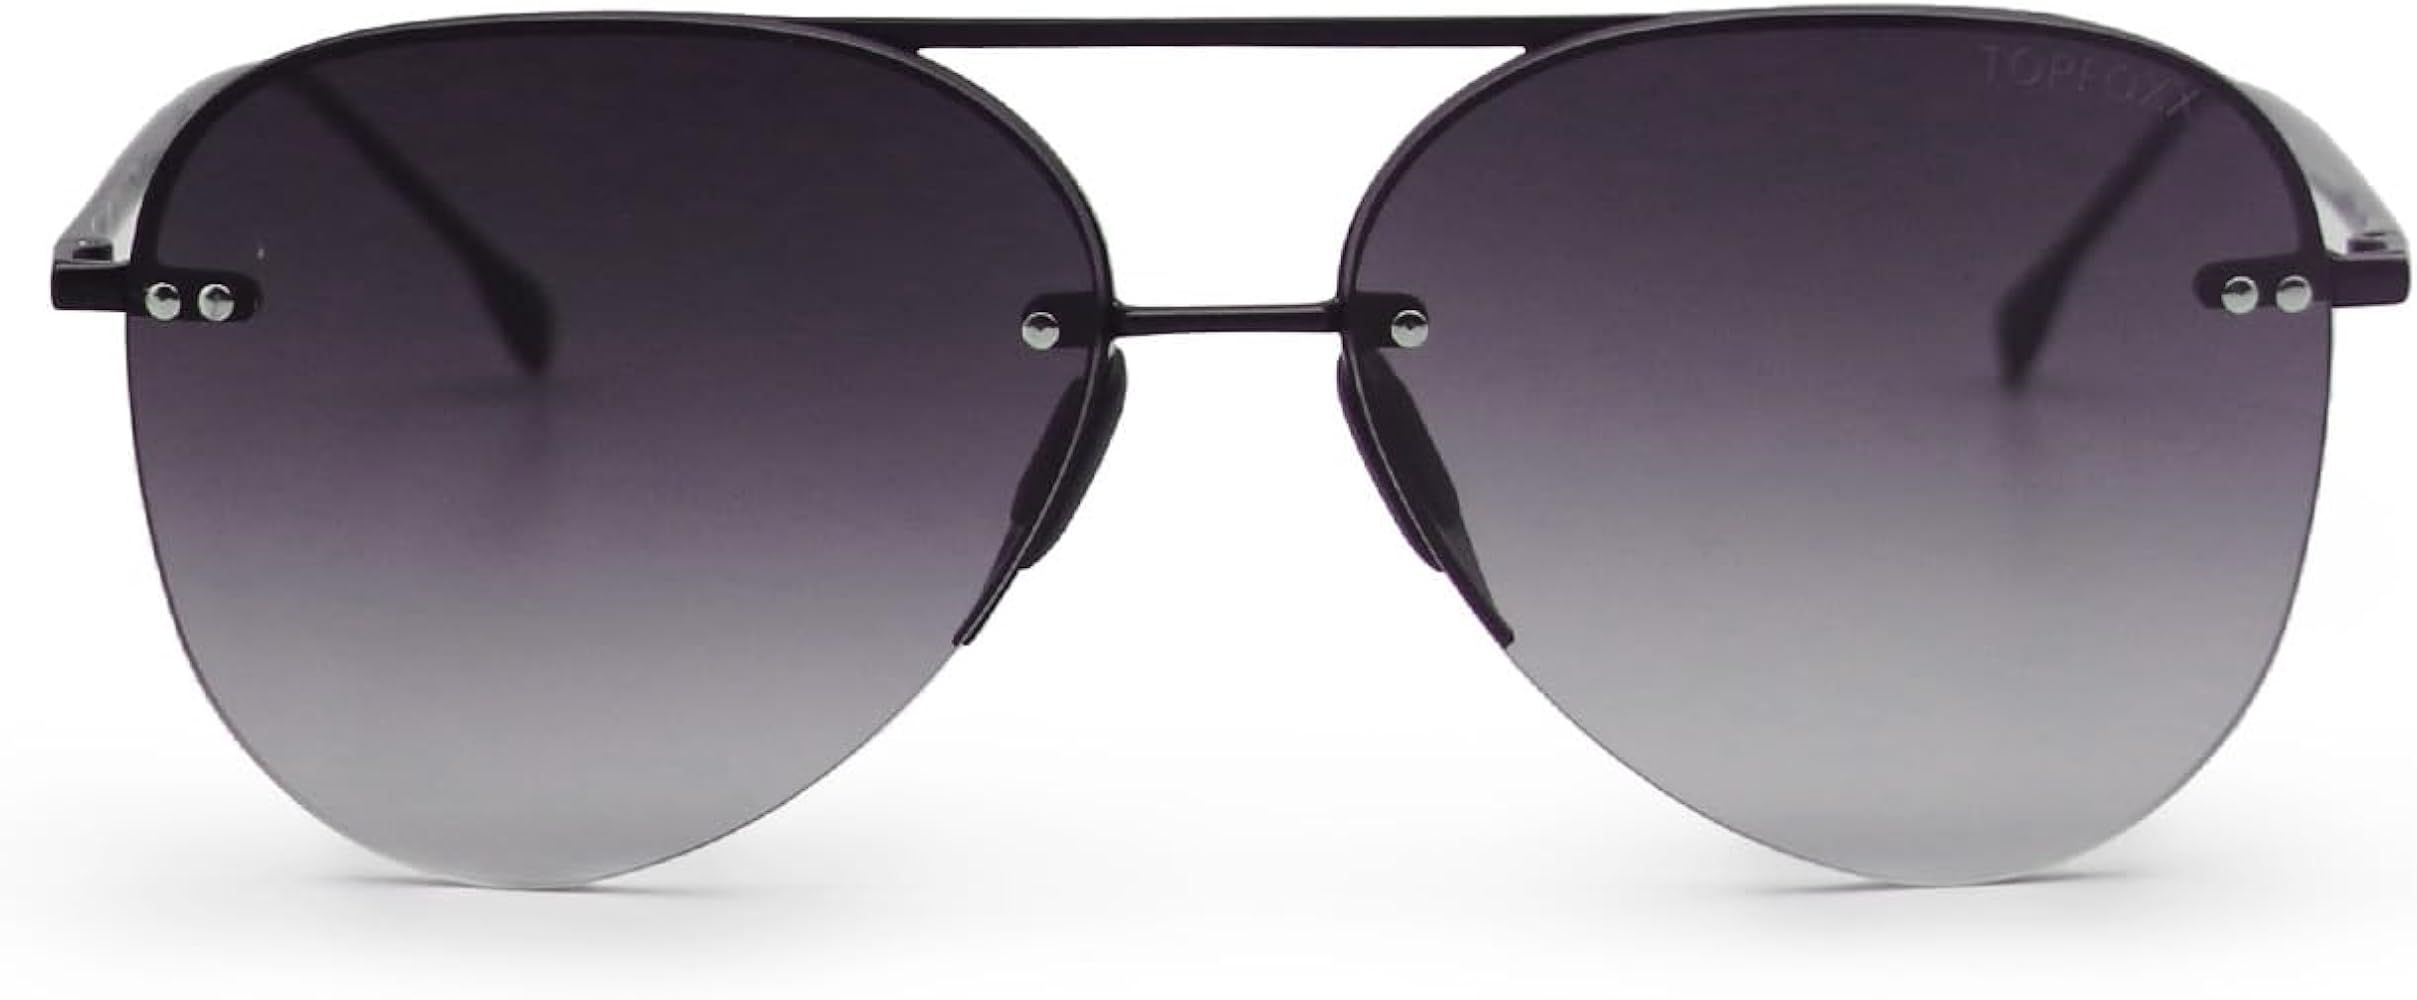 TOPFOXX - Megan 2 - Black Aviator Sunglasses for Women - Total UV400 Protection - Classic Pilot S... | Amazon (US)